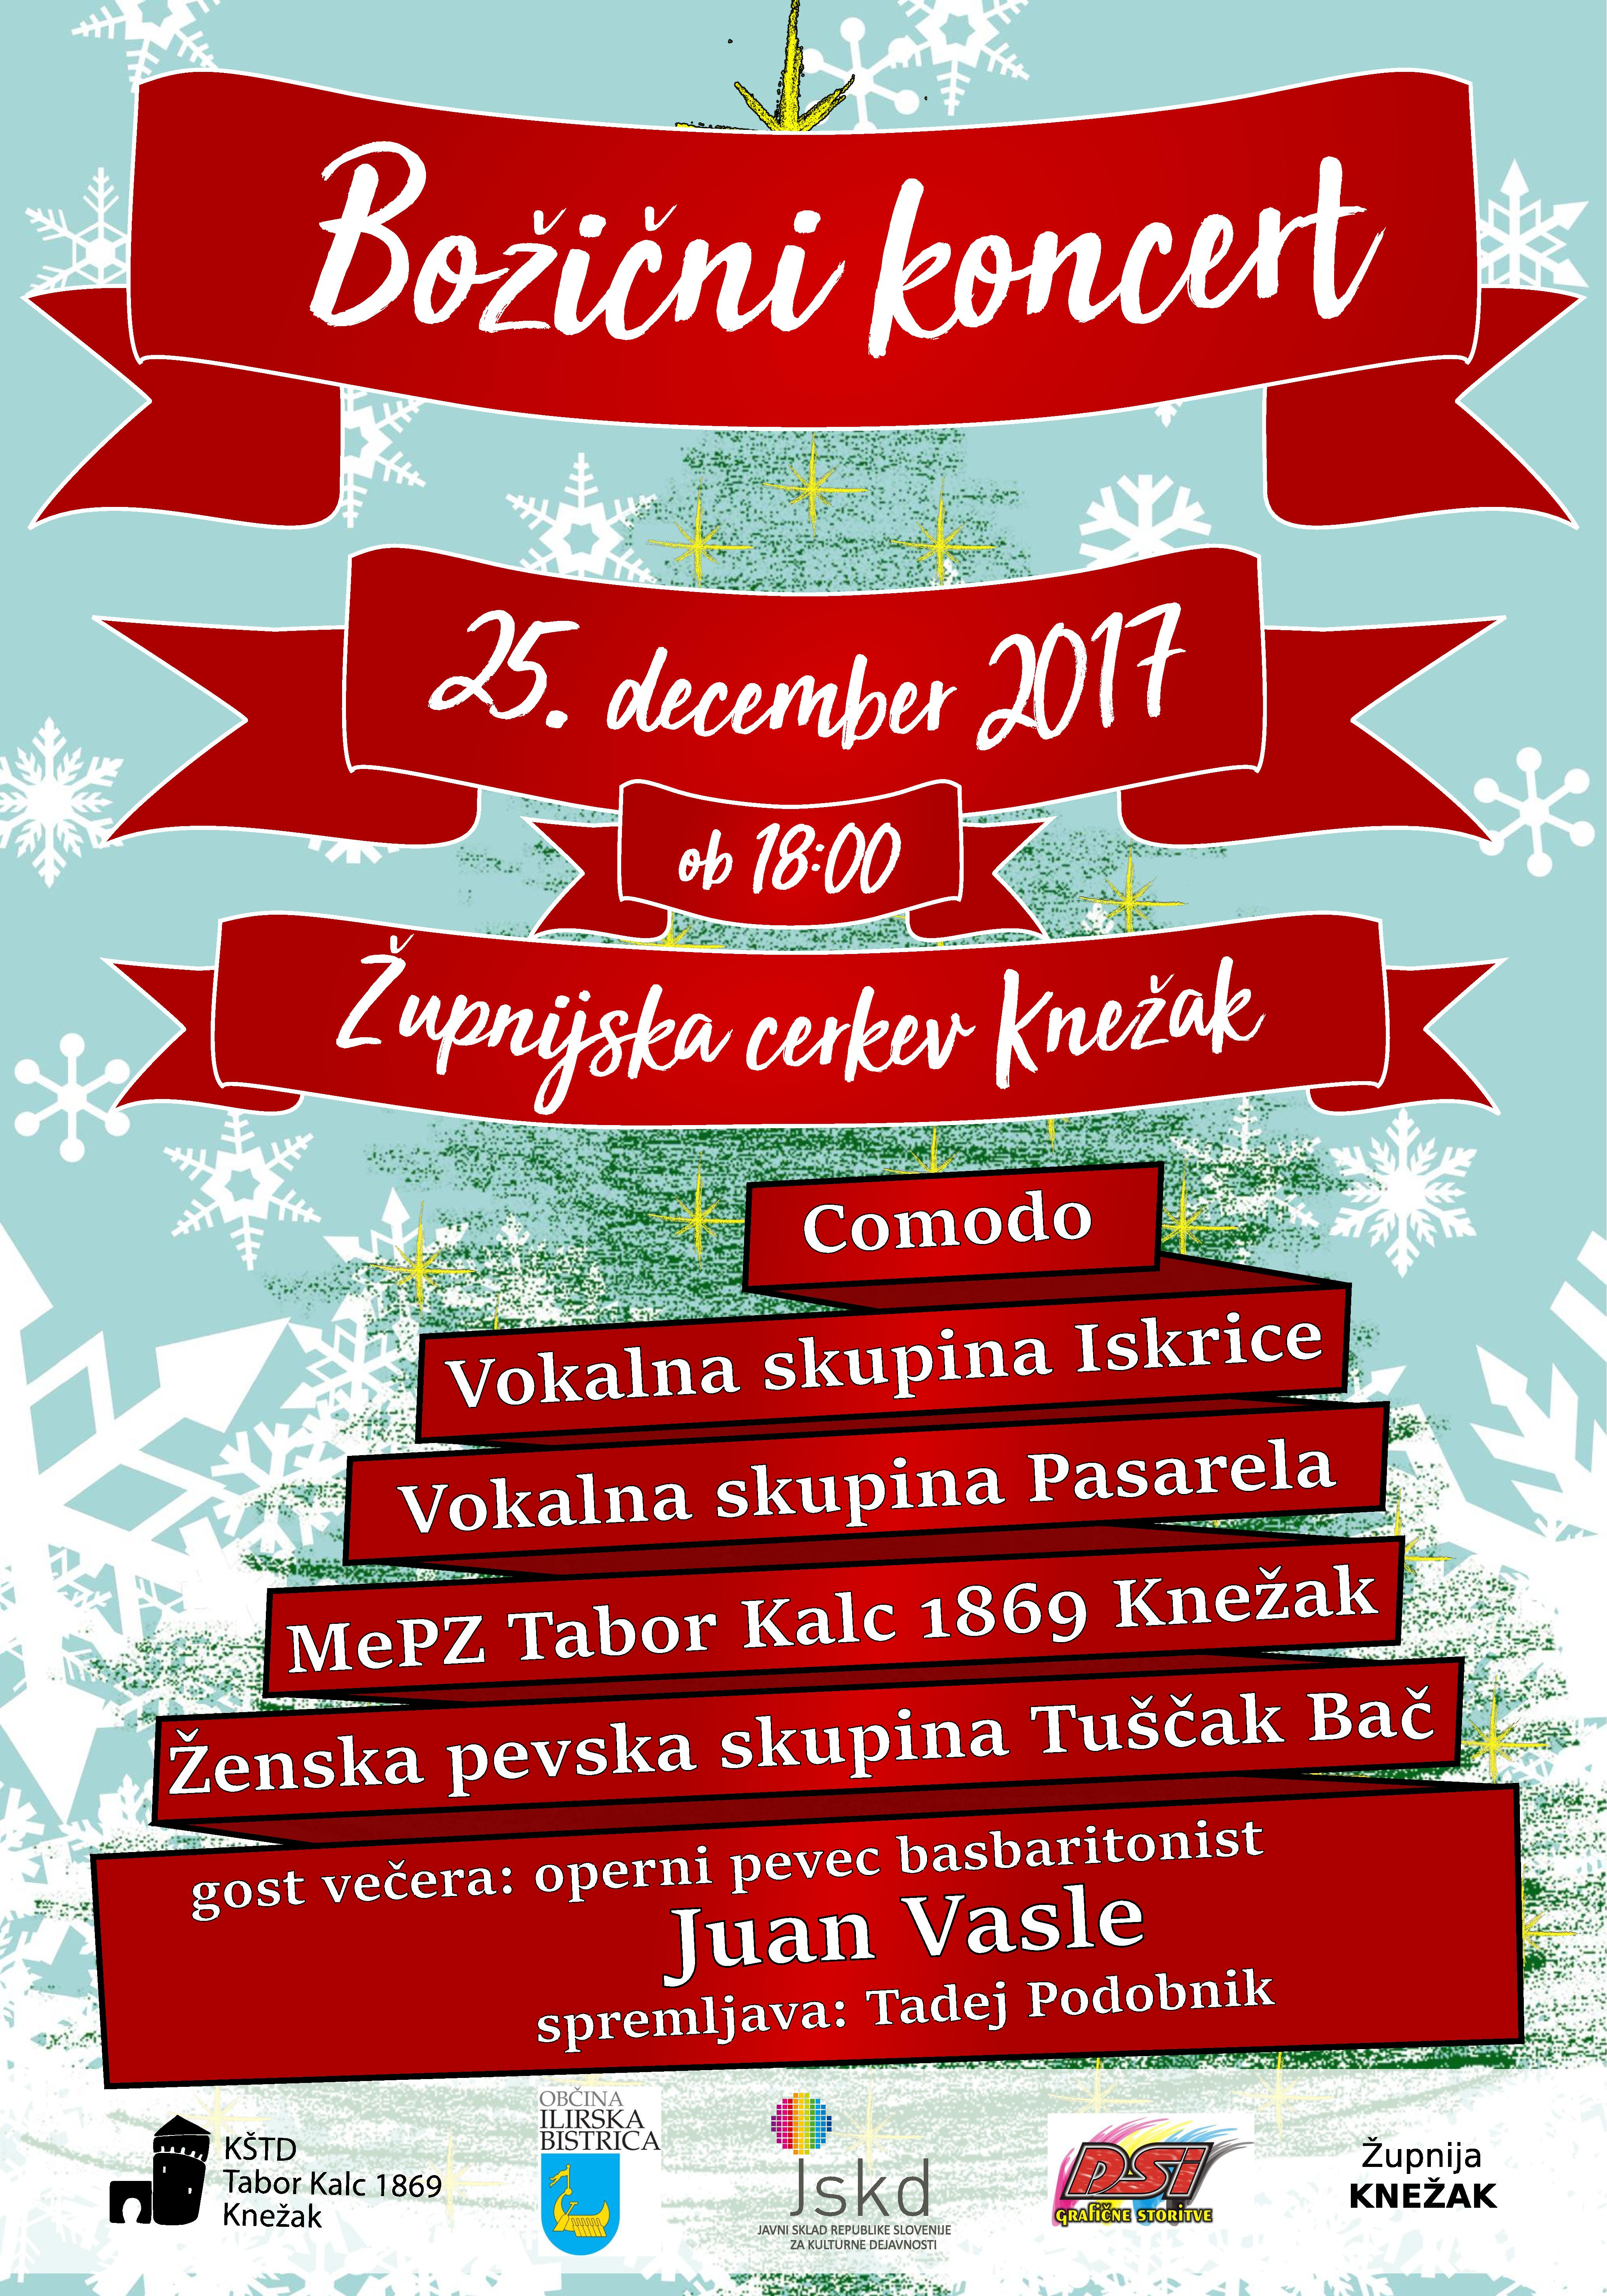 Plakat Bozicni koncert Knezak 2017 (3).compressed-page-001